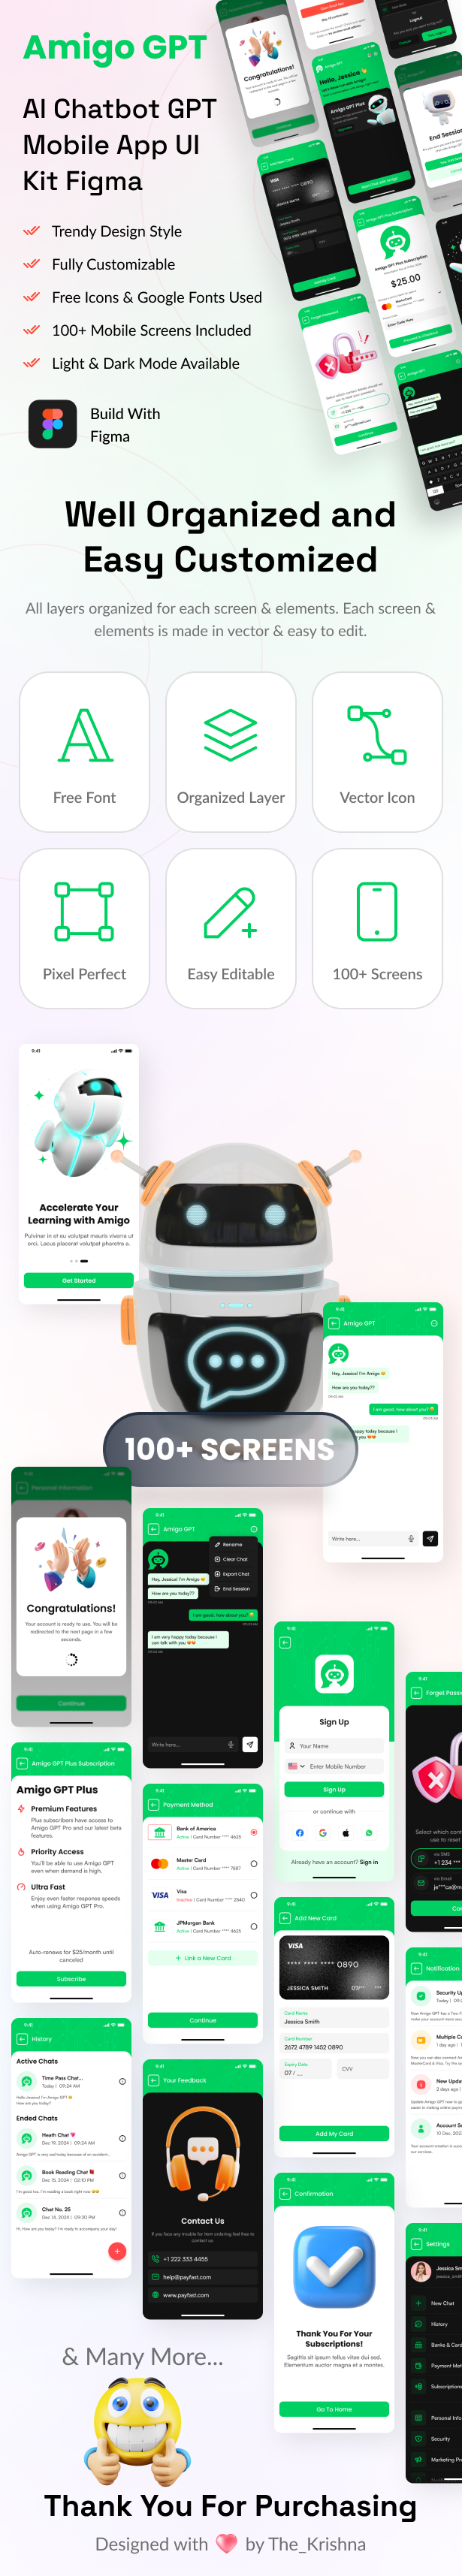 AI Chatbot GPT Mobile App UI Kit Figma Template - Amigo GPT - 3